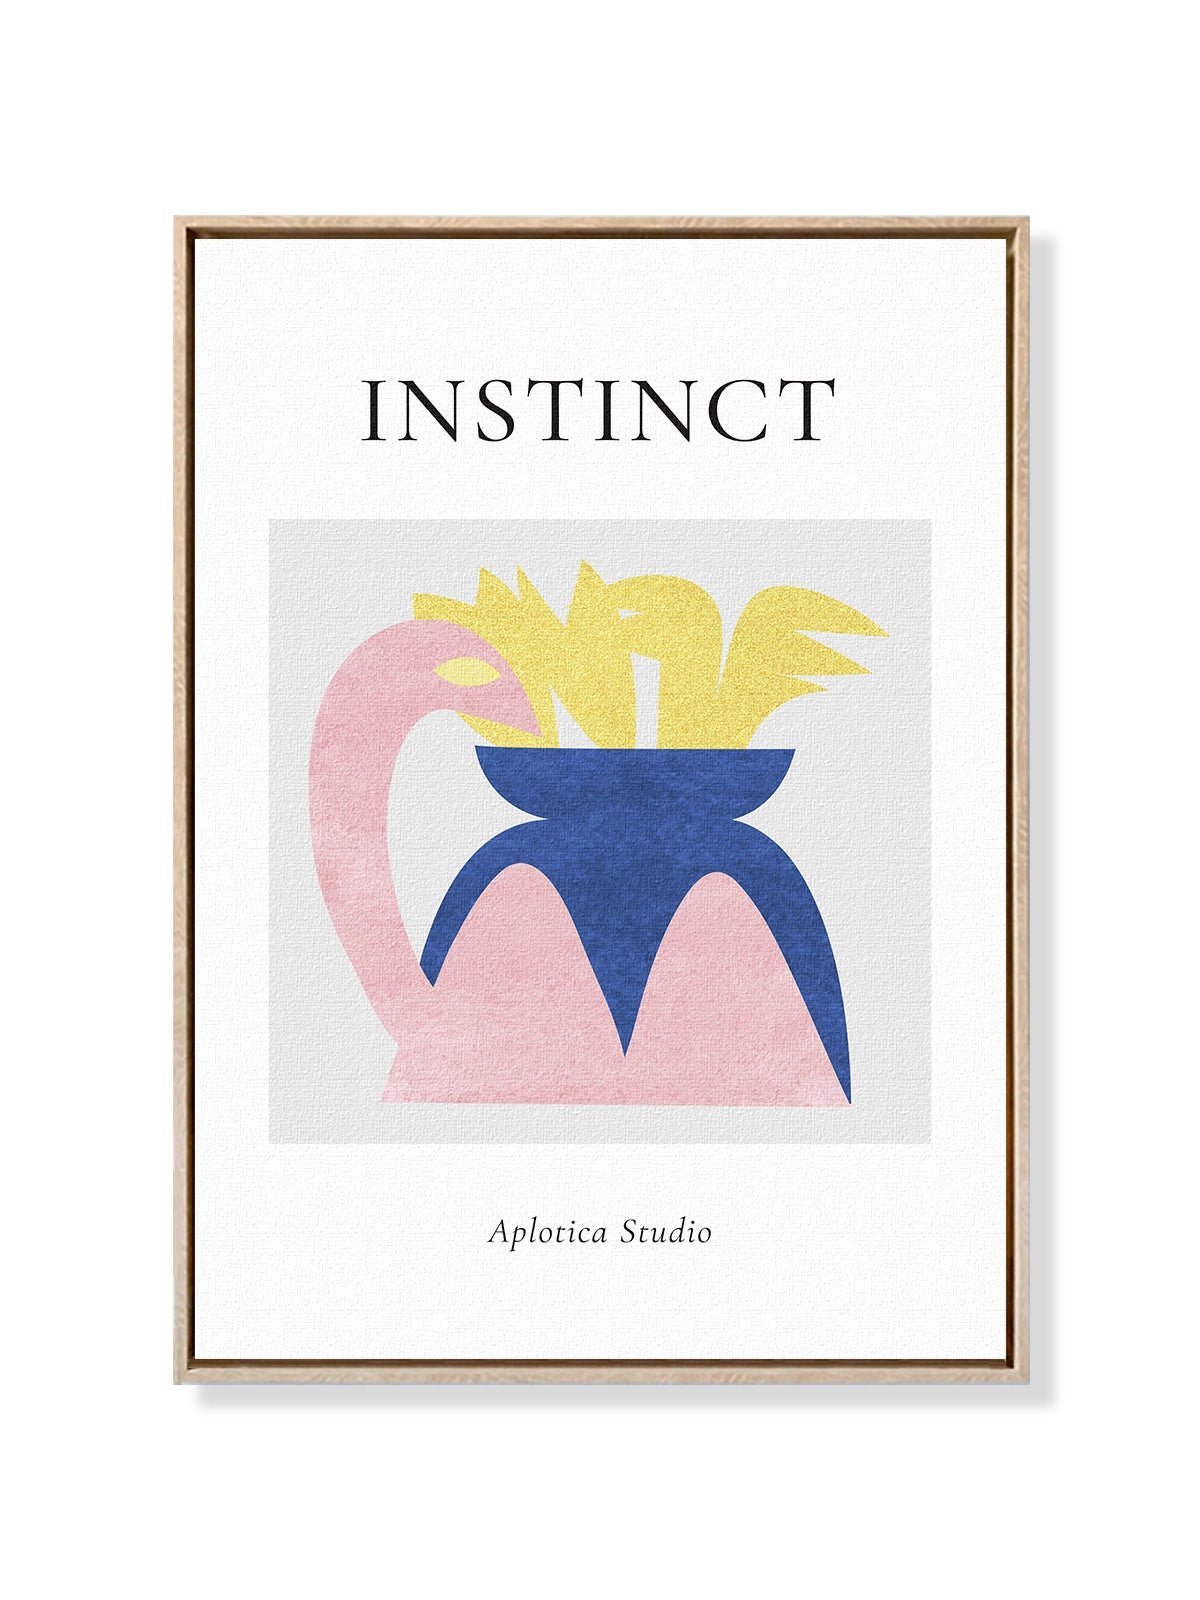 Instinct - Una Lámina de Aplotica Studio - Decora tu casa en Nomadart